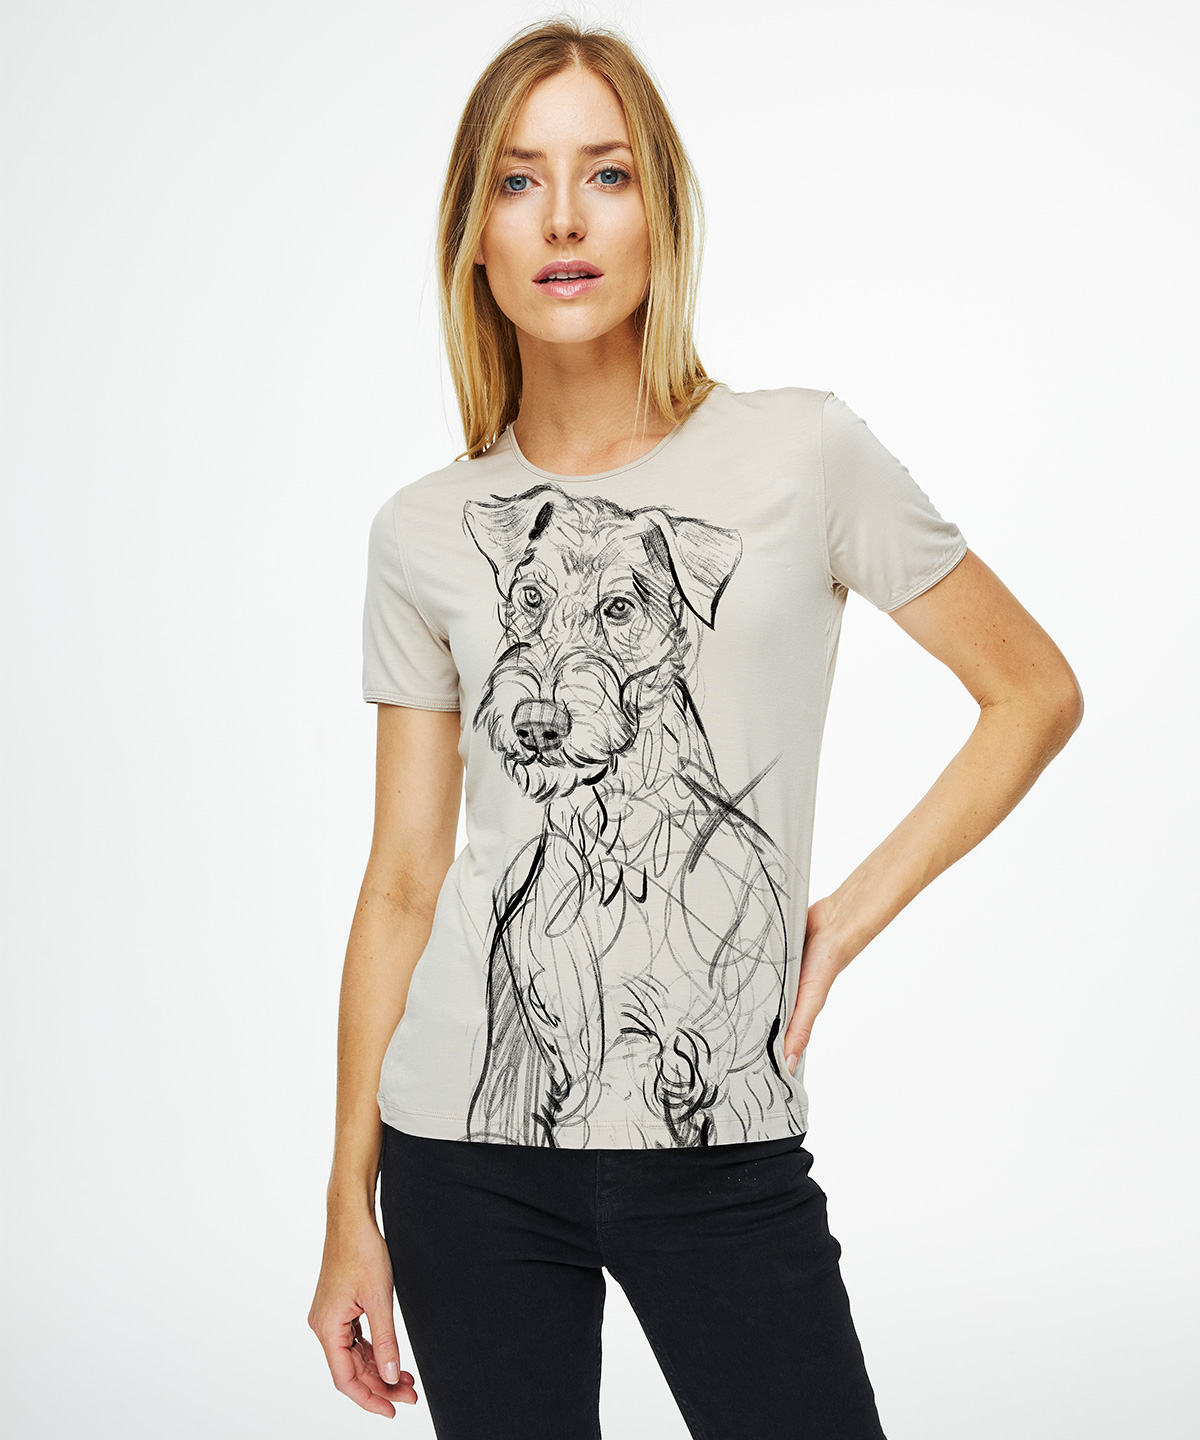 Airedale terrier hummus t-shirt woman